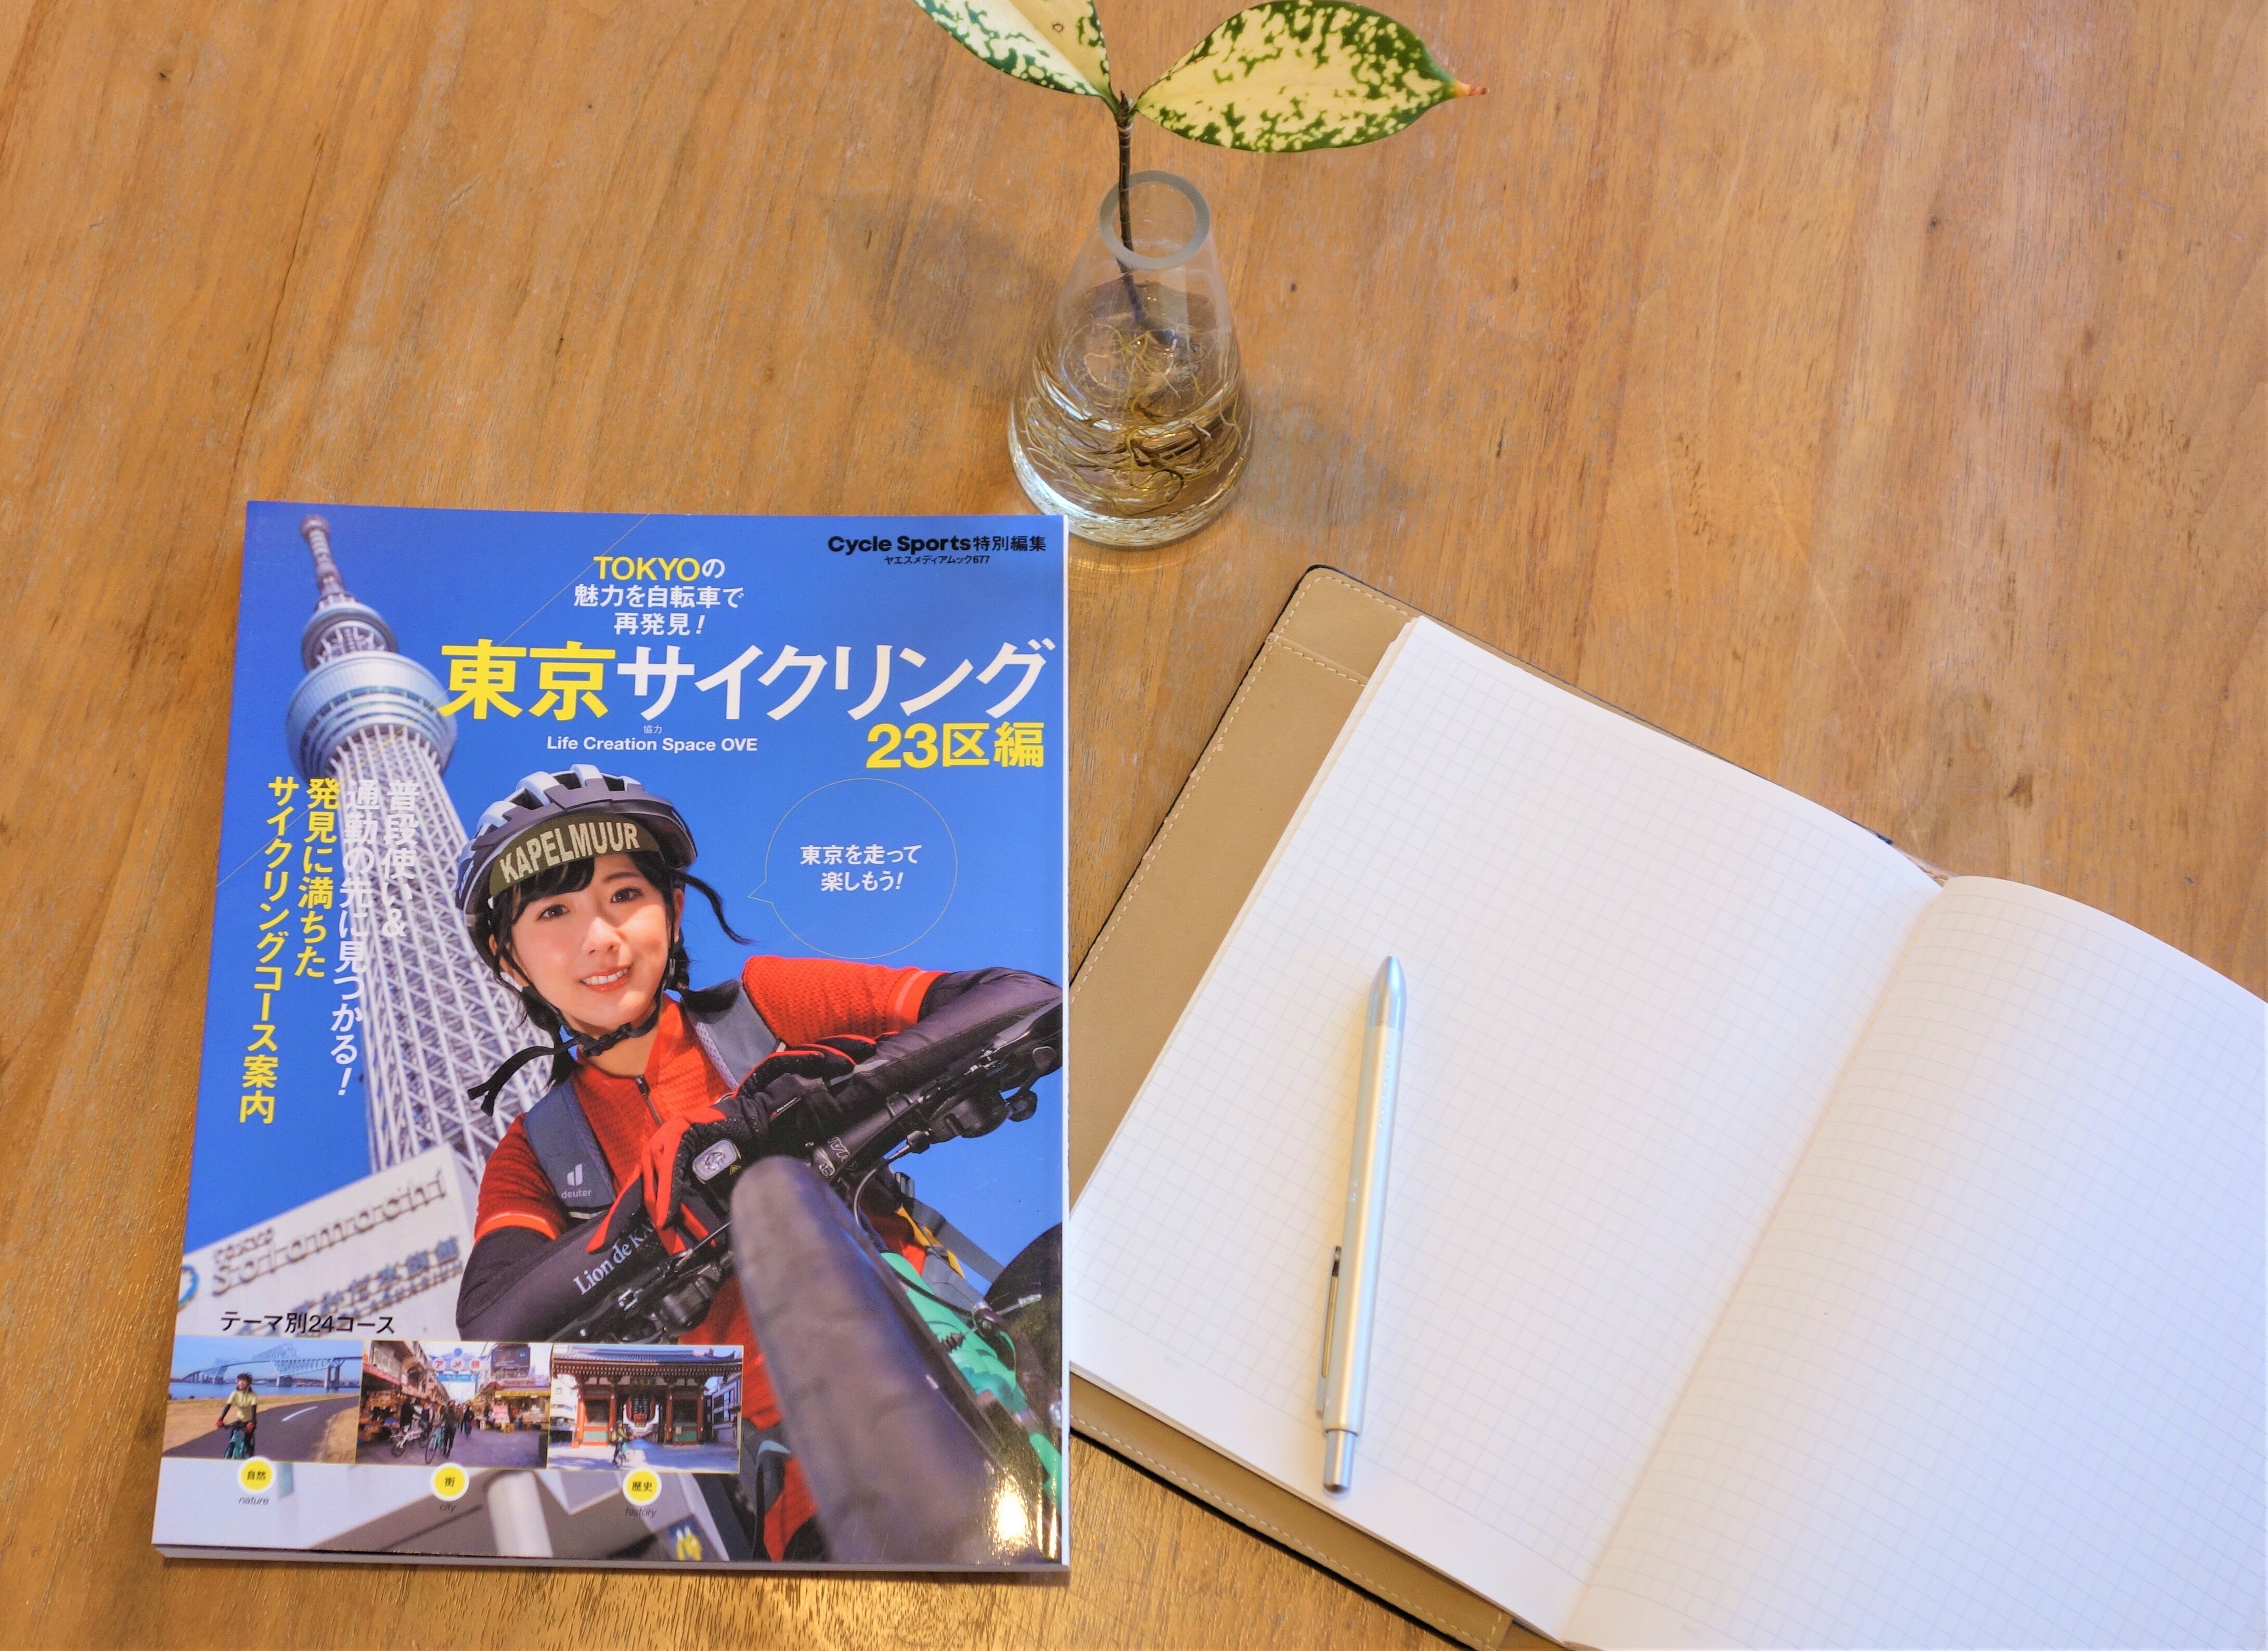 Cycle Sports特別編集
ヤエスメディアムック677「東京サイクリング 23区編」